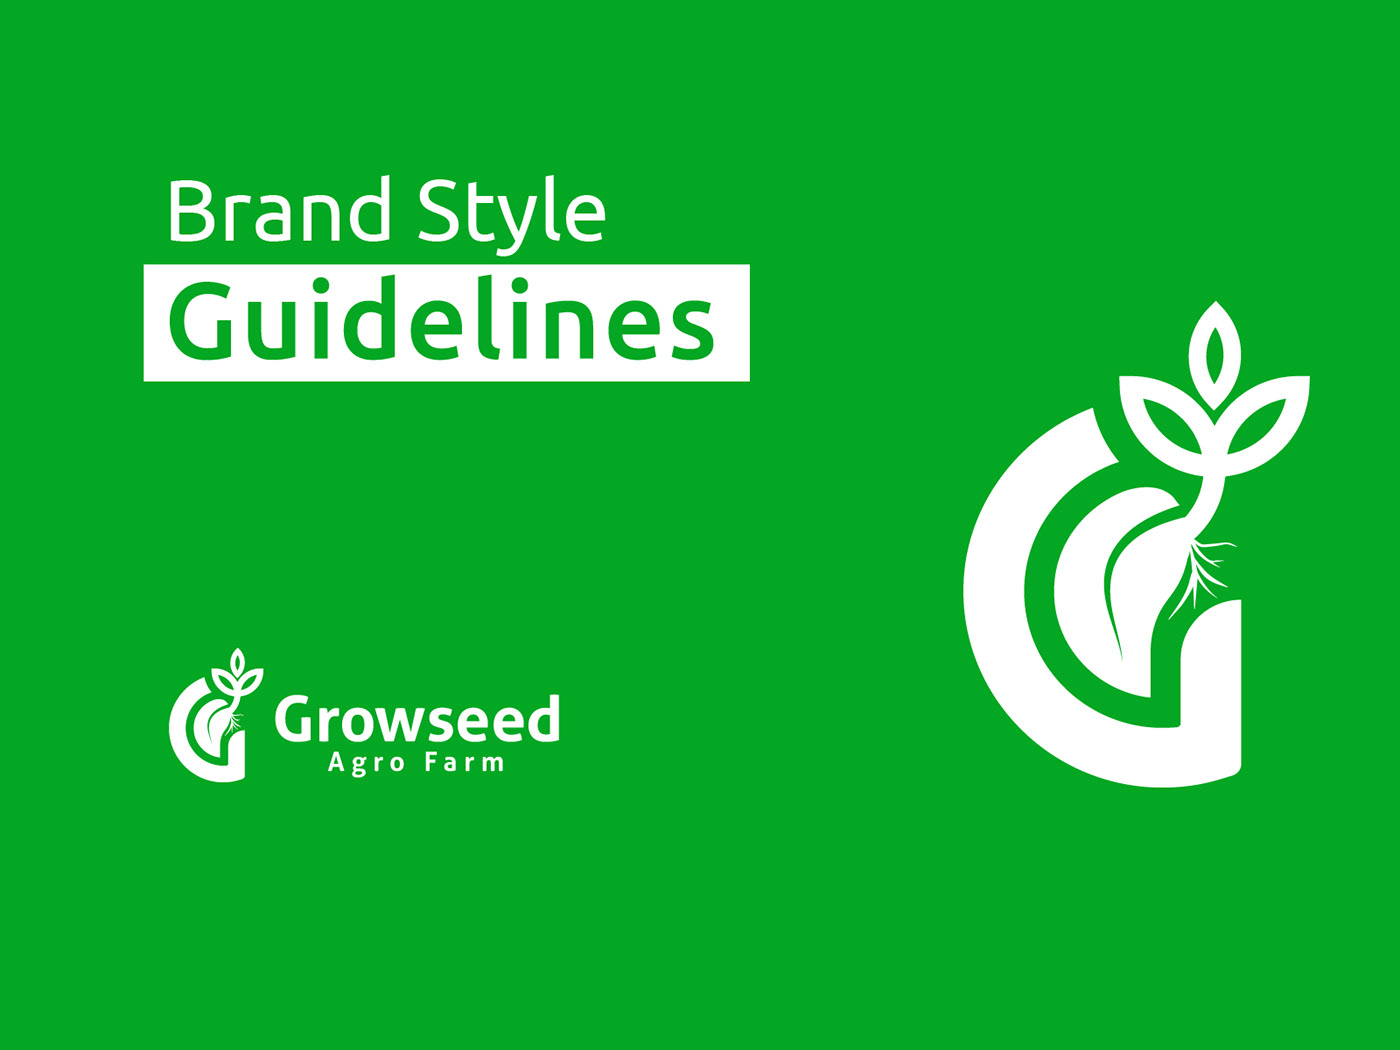 logo, logo design, agro farm logo, brand guidelines, brand identity, agriculture,

logo, logo design